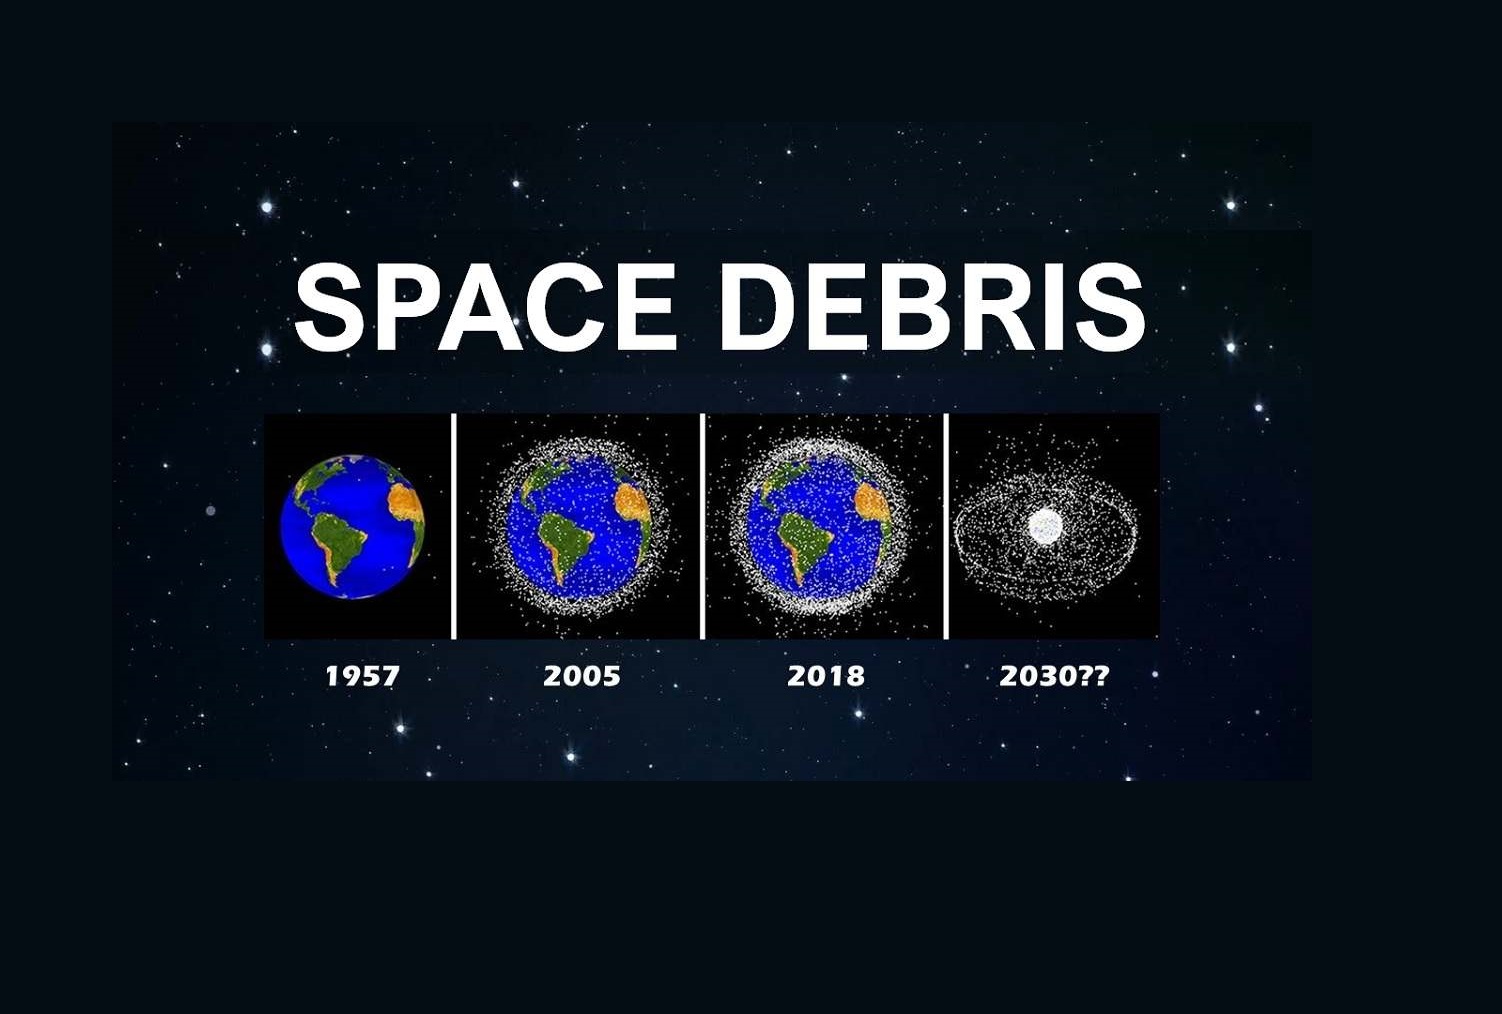 Space Debris Solution